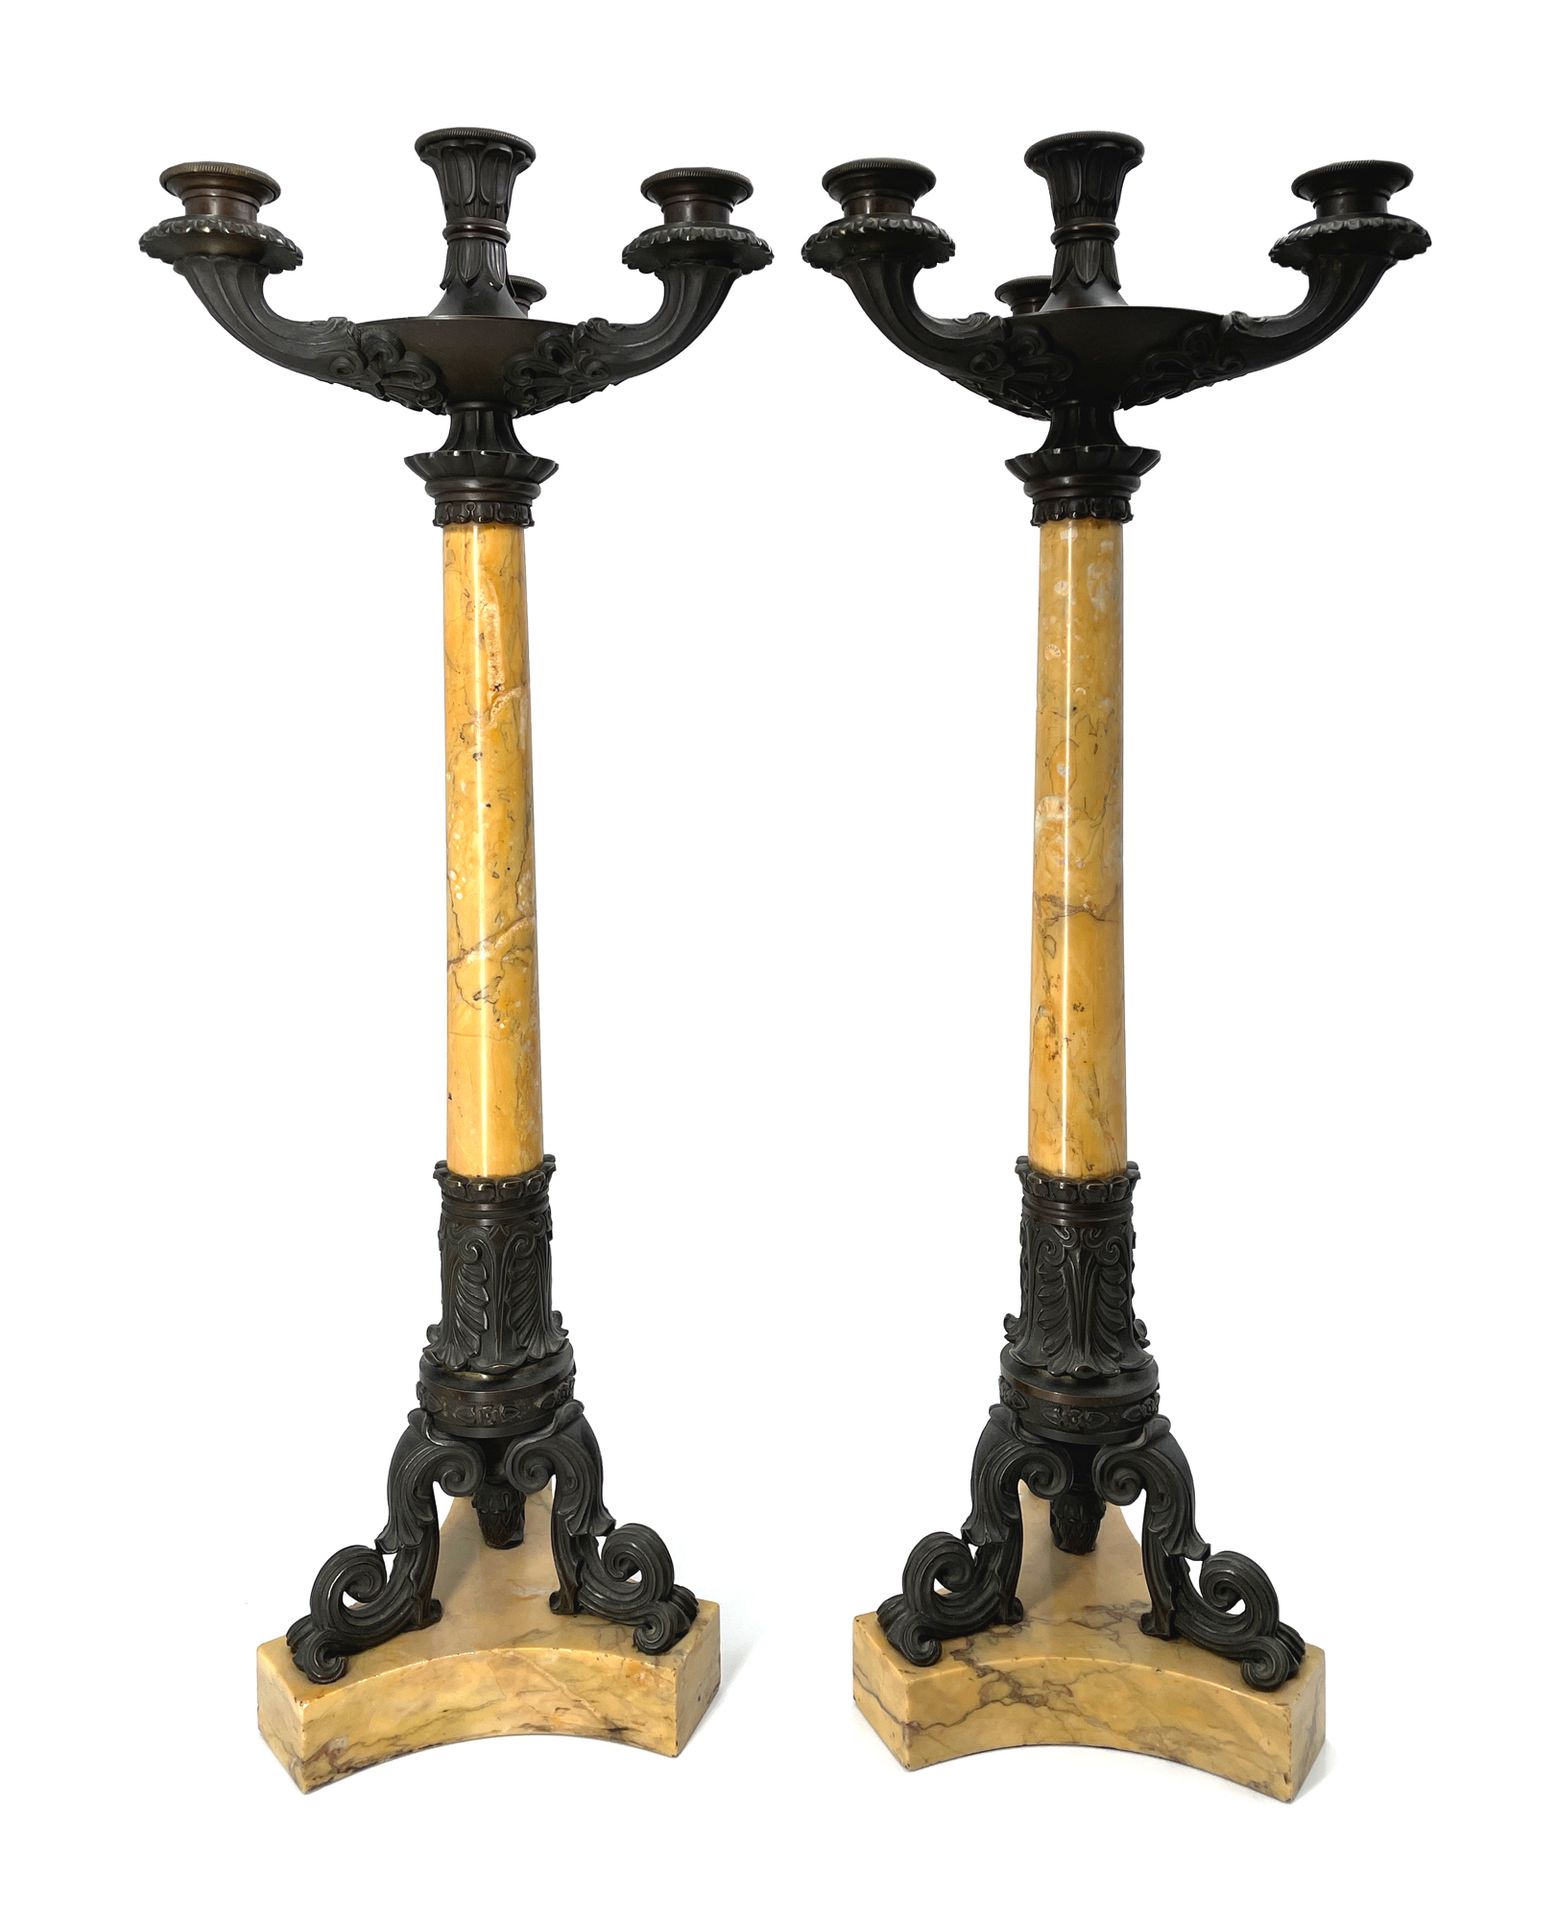 Null 一对大理石和青铜烛台，有棕榈树装饰。
修复时期
高66厘米